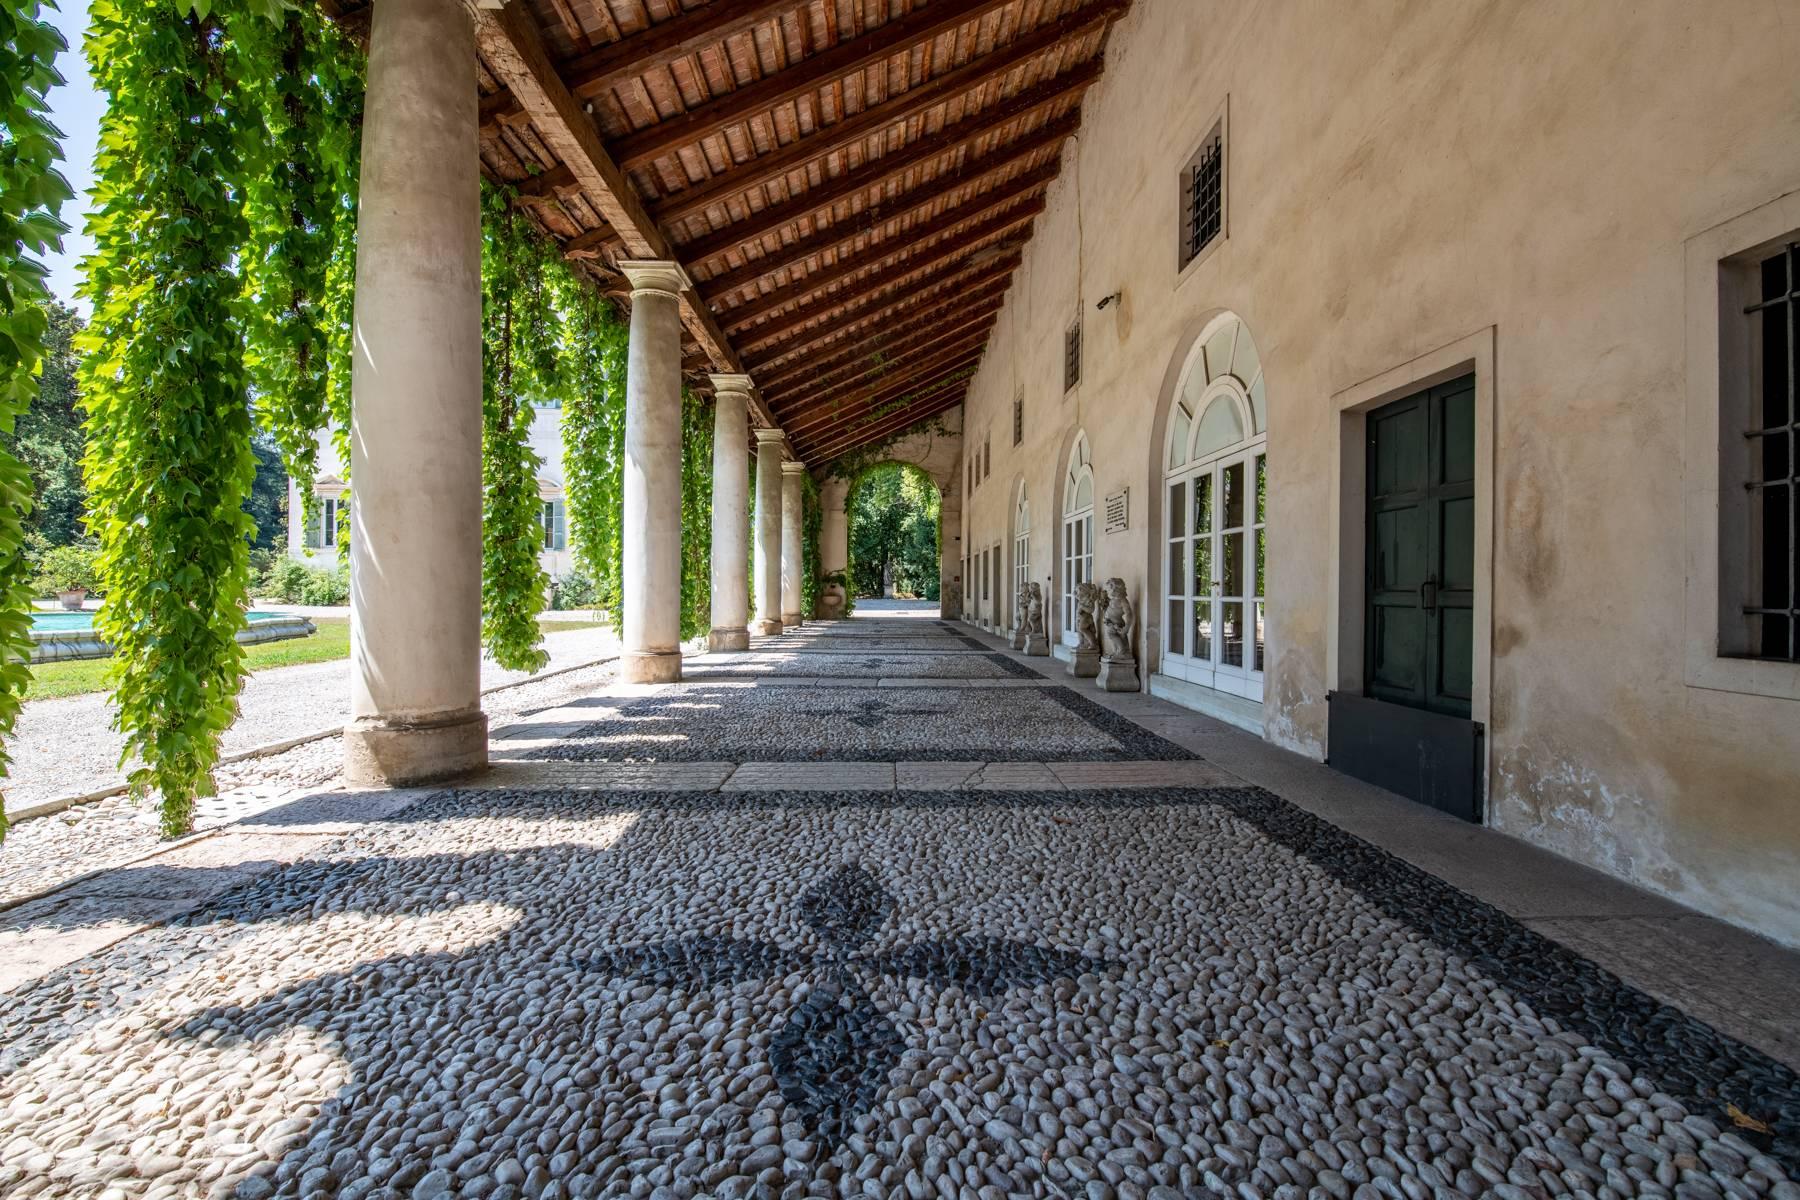 Elegante Villa Veneta con parco romantico e adiacenze - 5